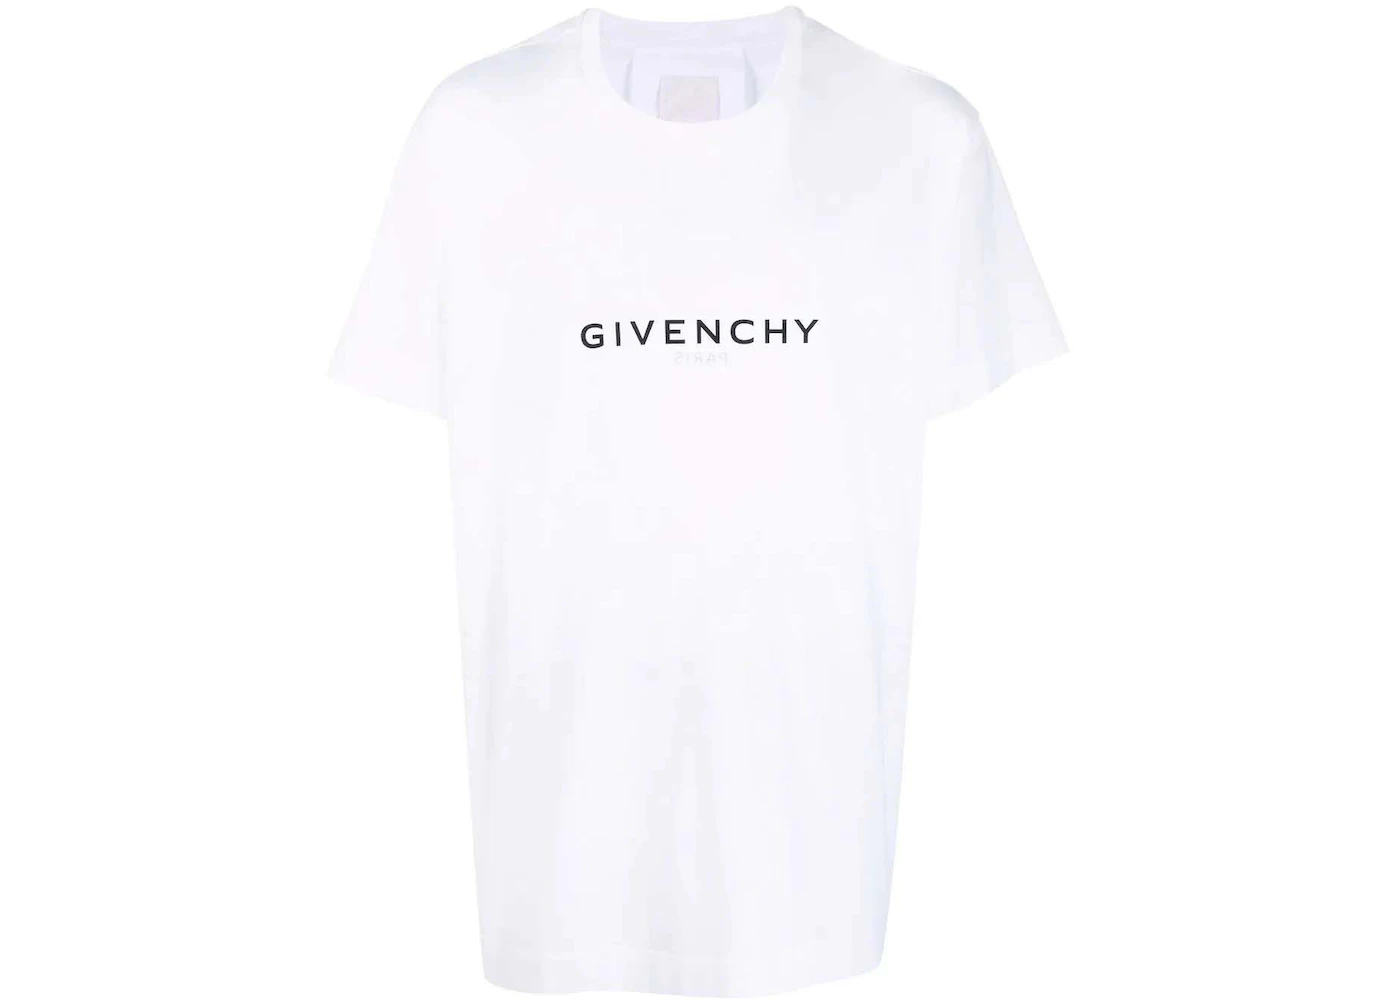 Givenchy Logo White/Black Men's - US